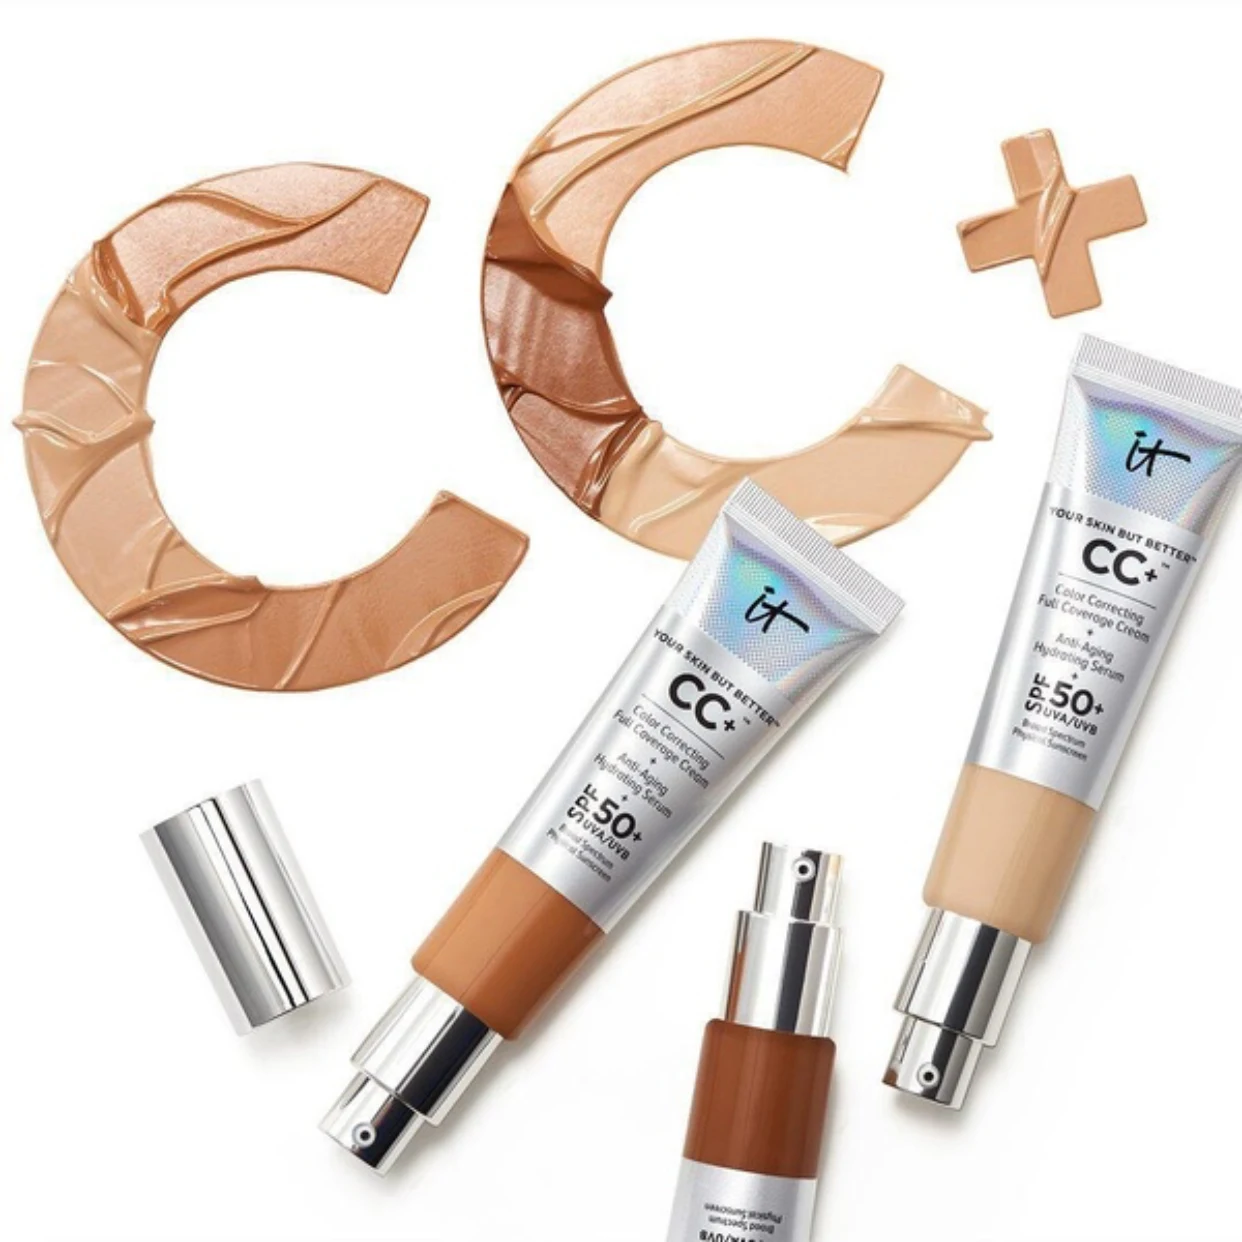 

Face Concealer It Cosmetics CC+ Cream SPF50 Full Cover Medium Light Base Liquid Foundation Makeup Whitening Your Skin But Better